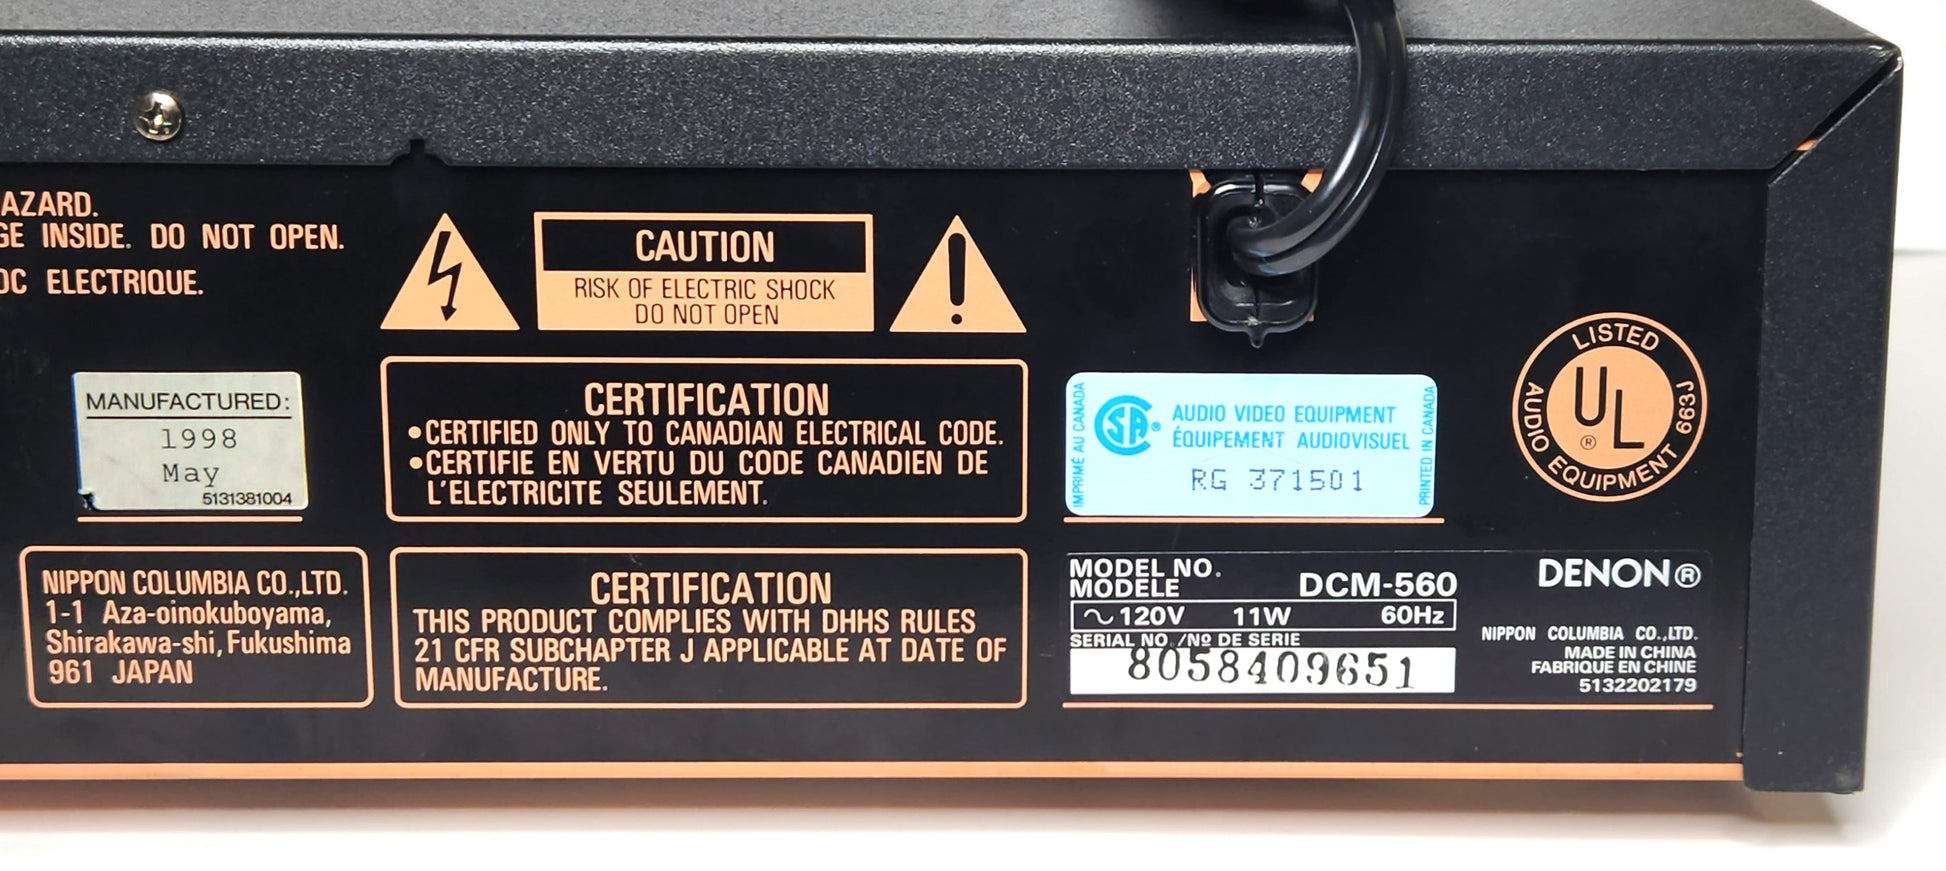 Denon DCM-560 5-Disc Carousel CD Changer - Label